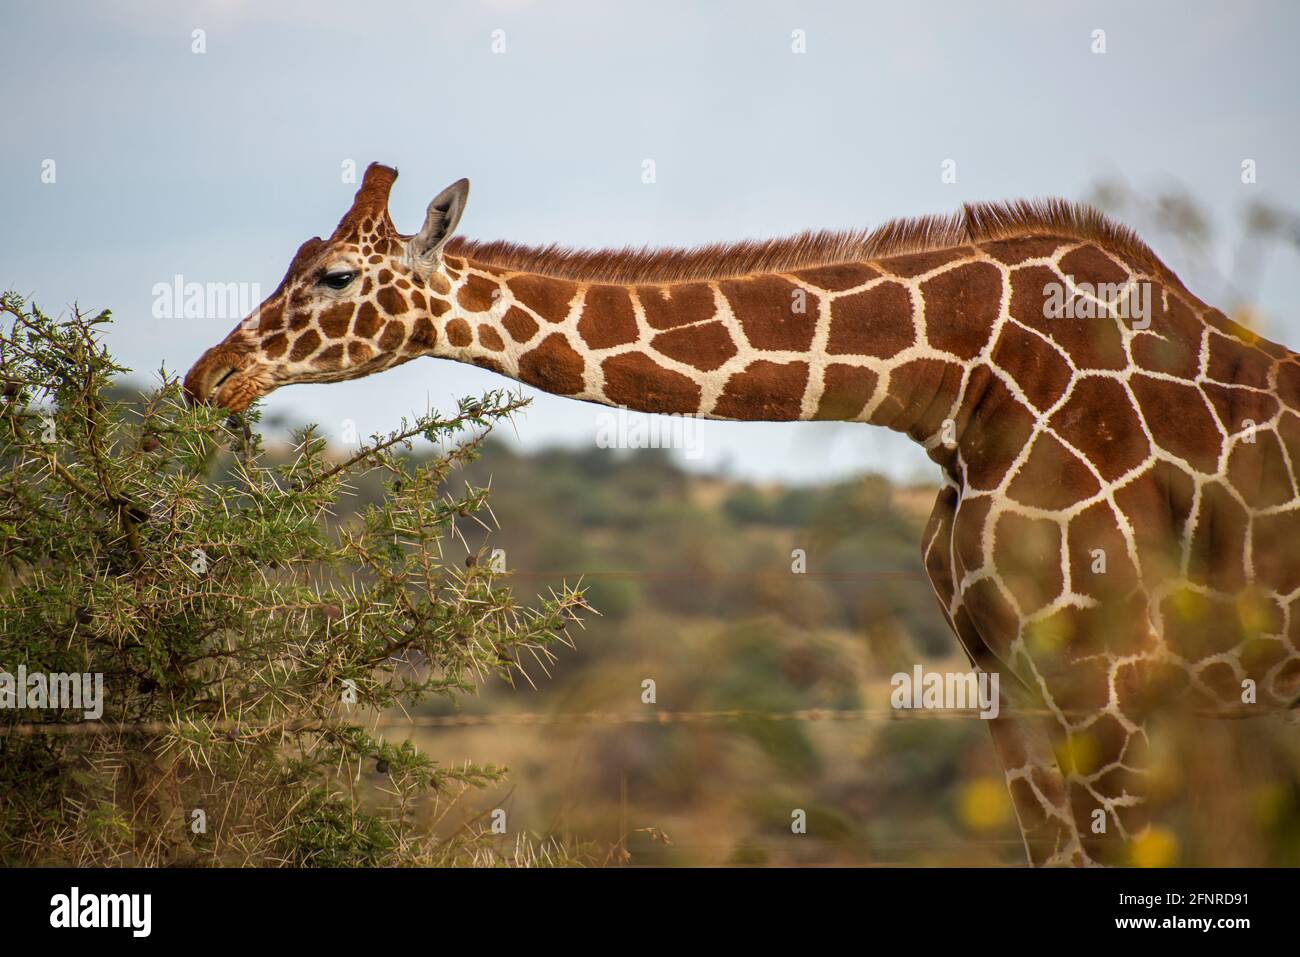 giraffe eating leaves from an acacia tree Stock Photo